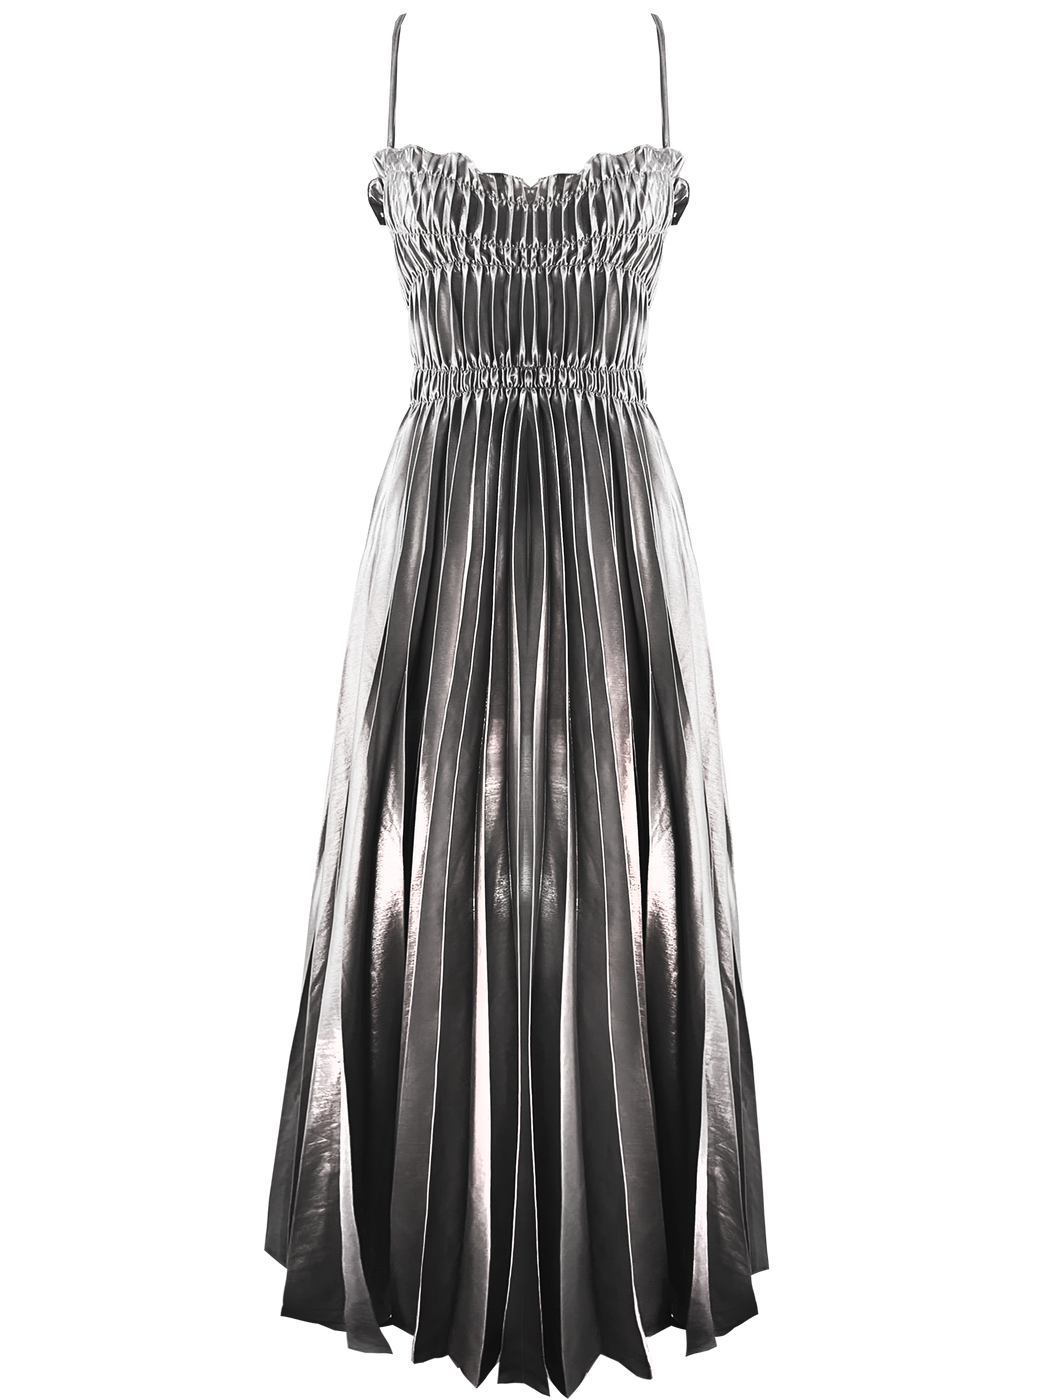 File:Lead Alloy Dress - Hem Weight (FindID 741707).jpg - Wikimedia Commons